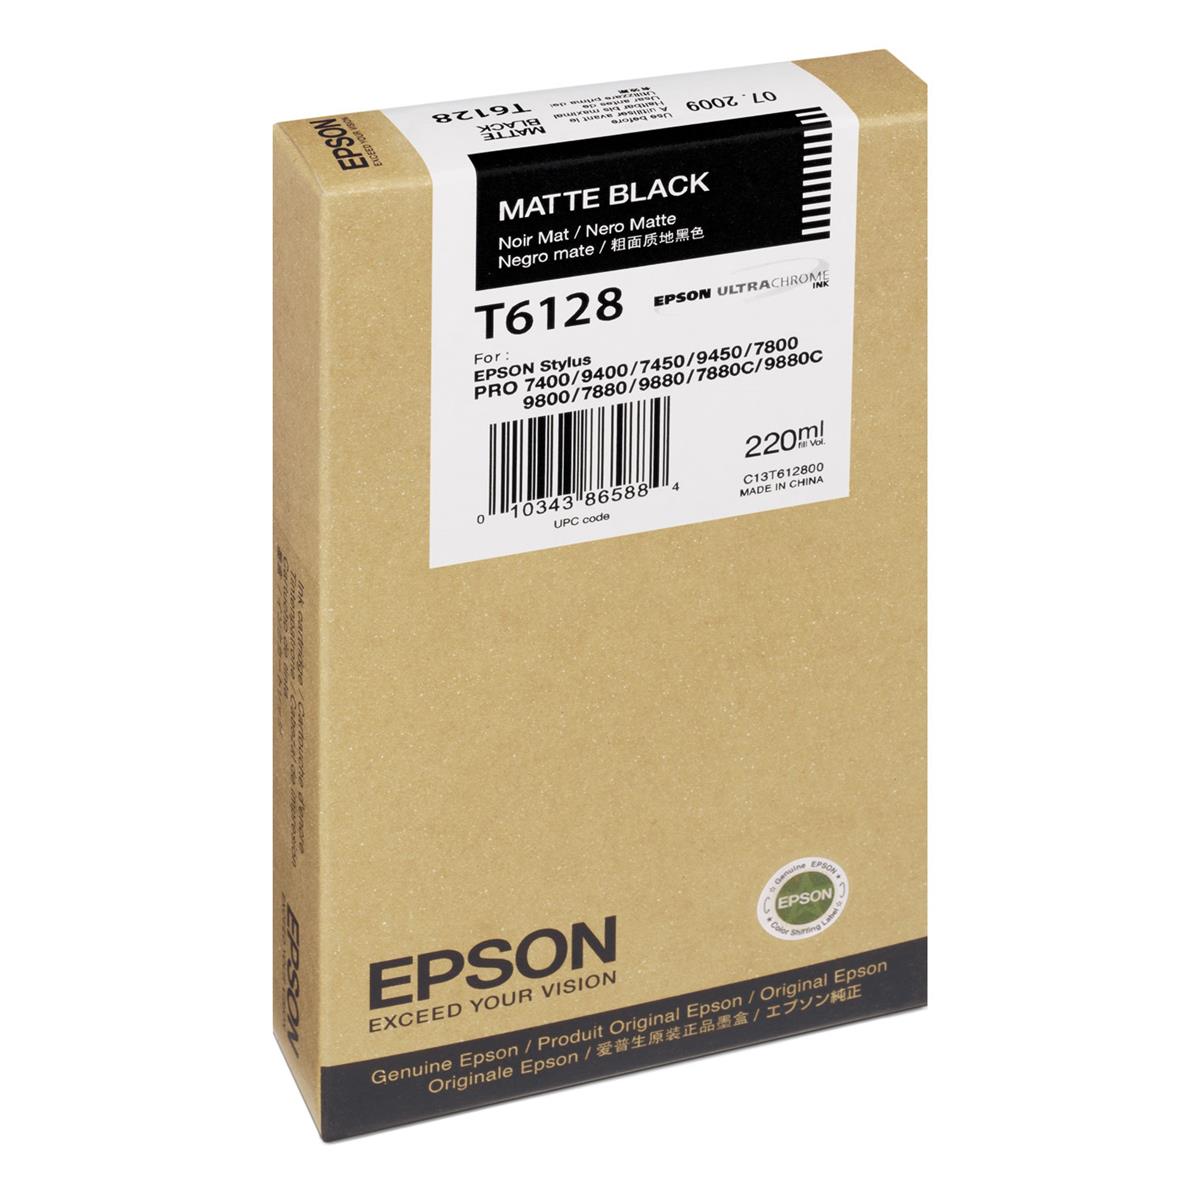 

Epson T603100 UltraChrome 220ml Printer Ink, for Stylus Pro 7880, Photo Black